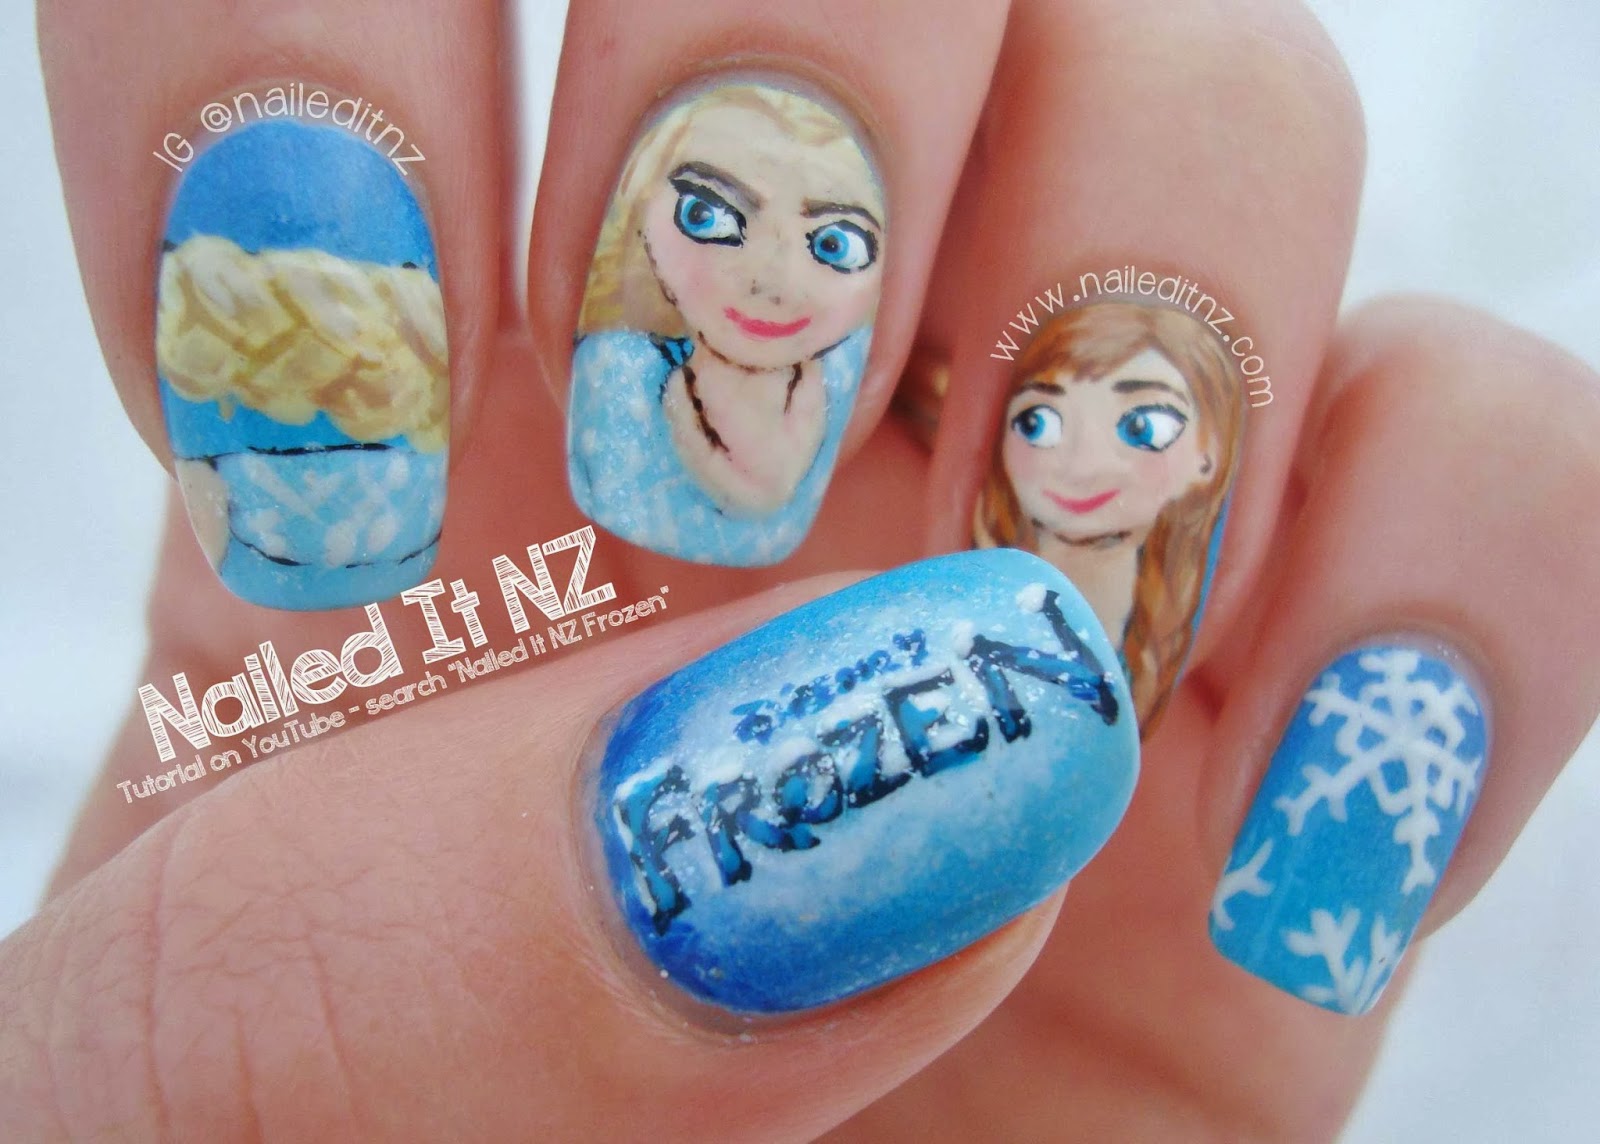 Disney Nail Art #5 - Frozen!